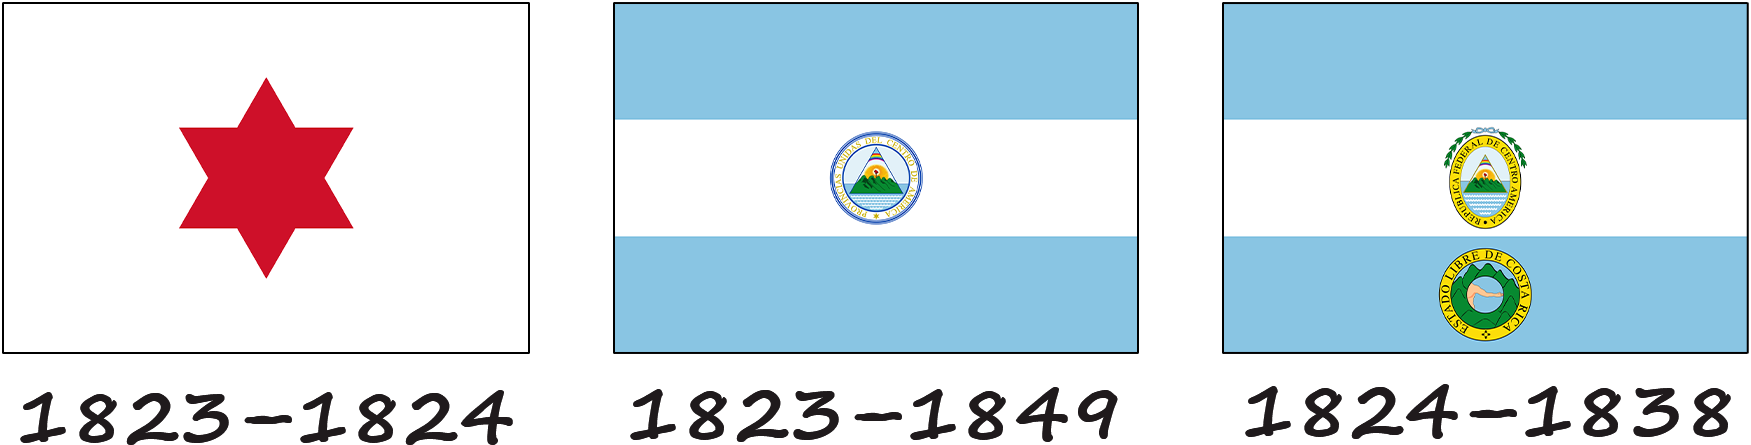 Historia de la bandera de Costa Rica